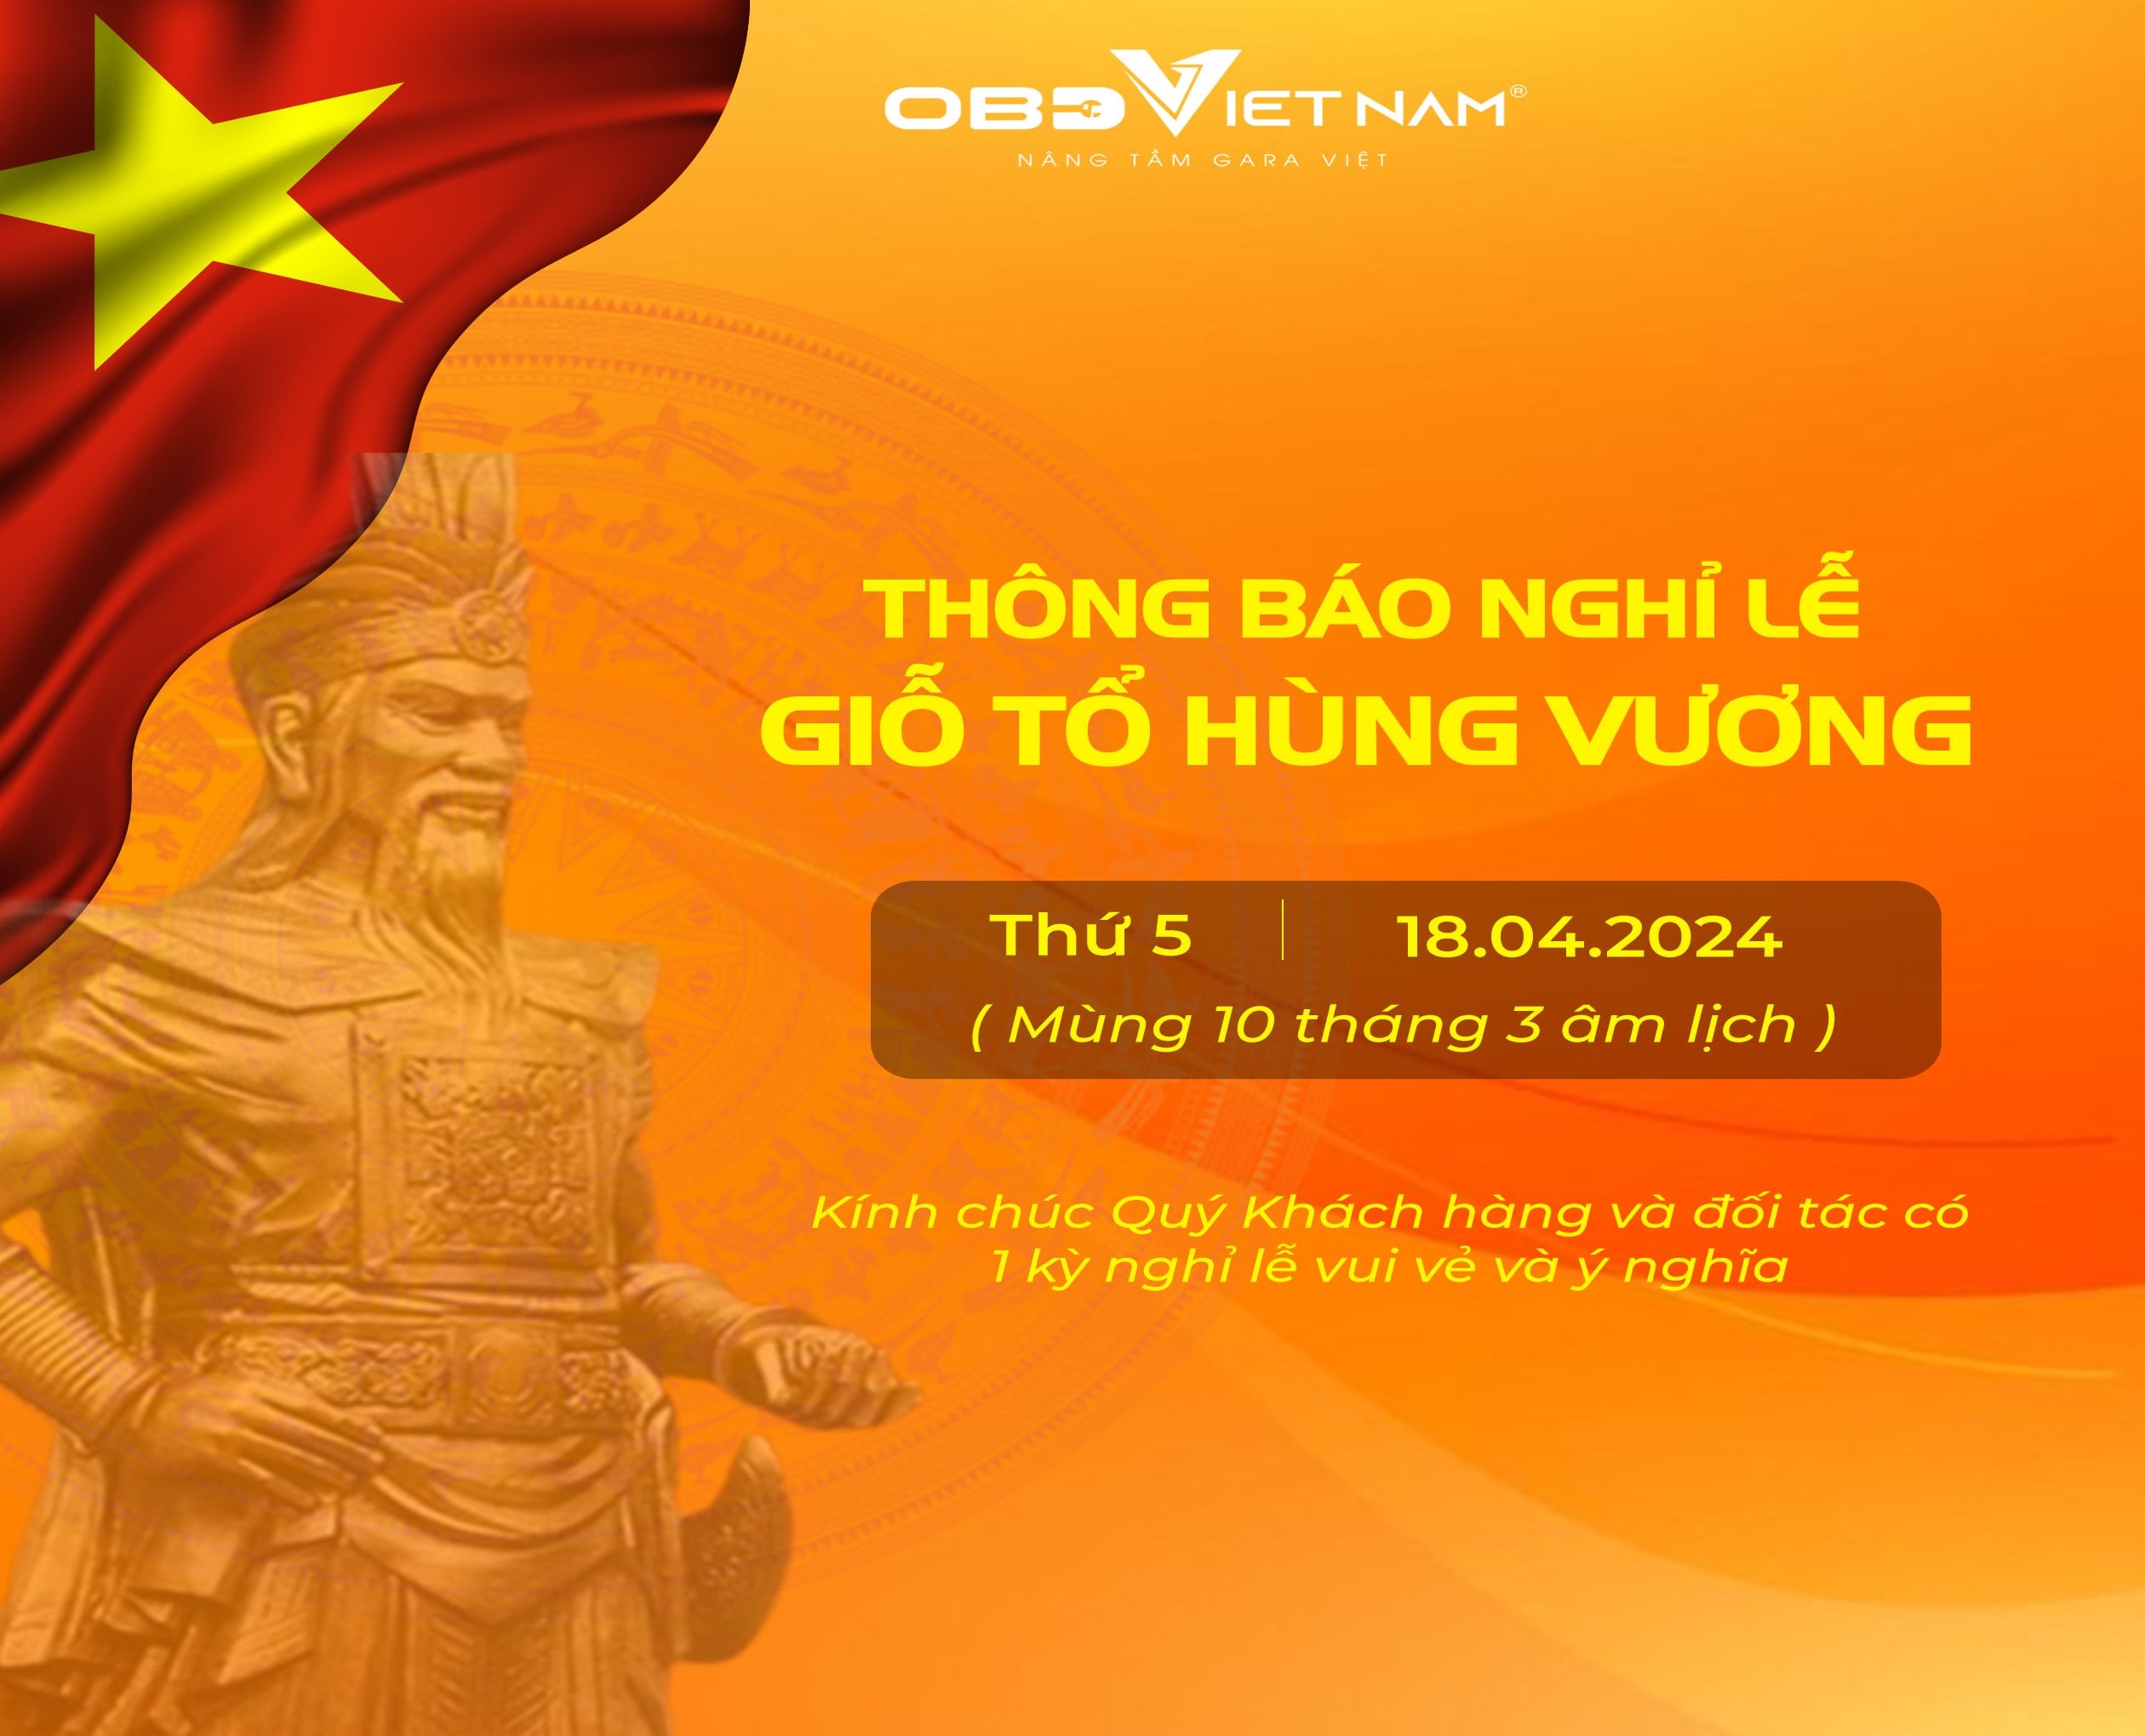 thong-bao-nghi-le-gio-to-hung-vuong-2024-obdvietnam-min